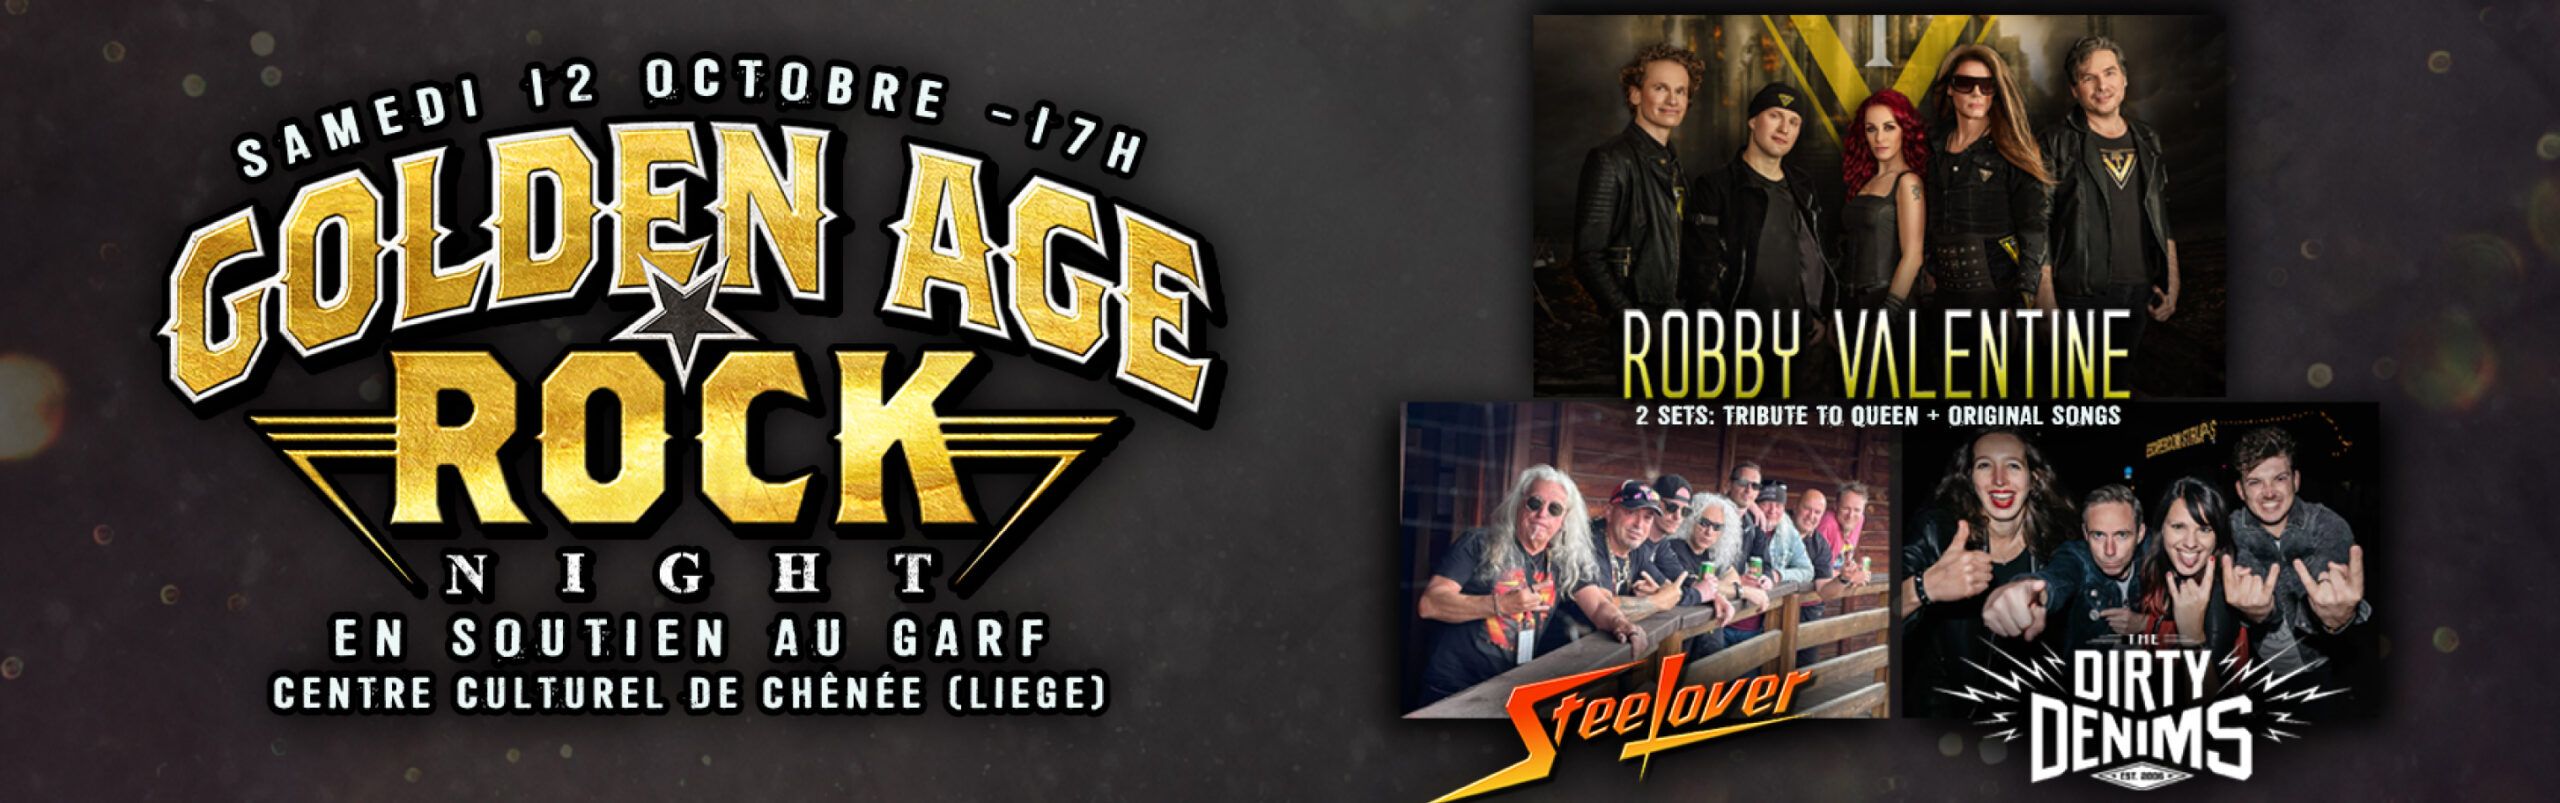 Golden Age Rock Festival header